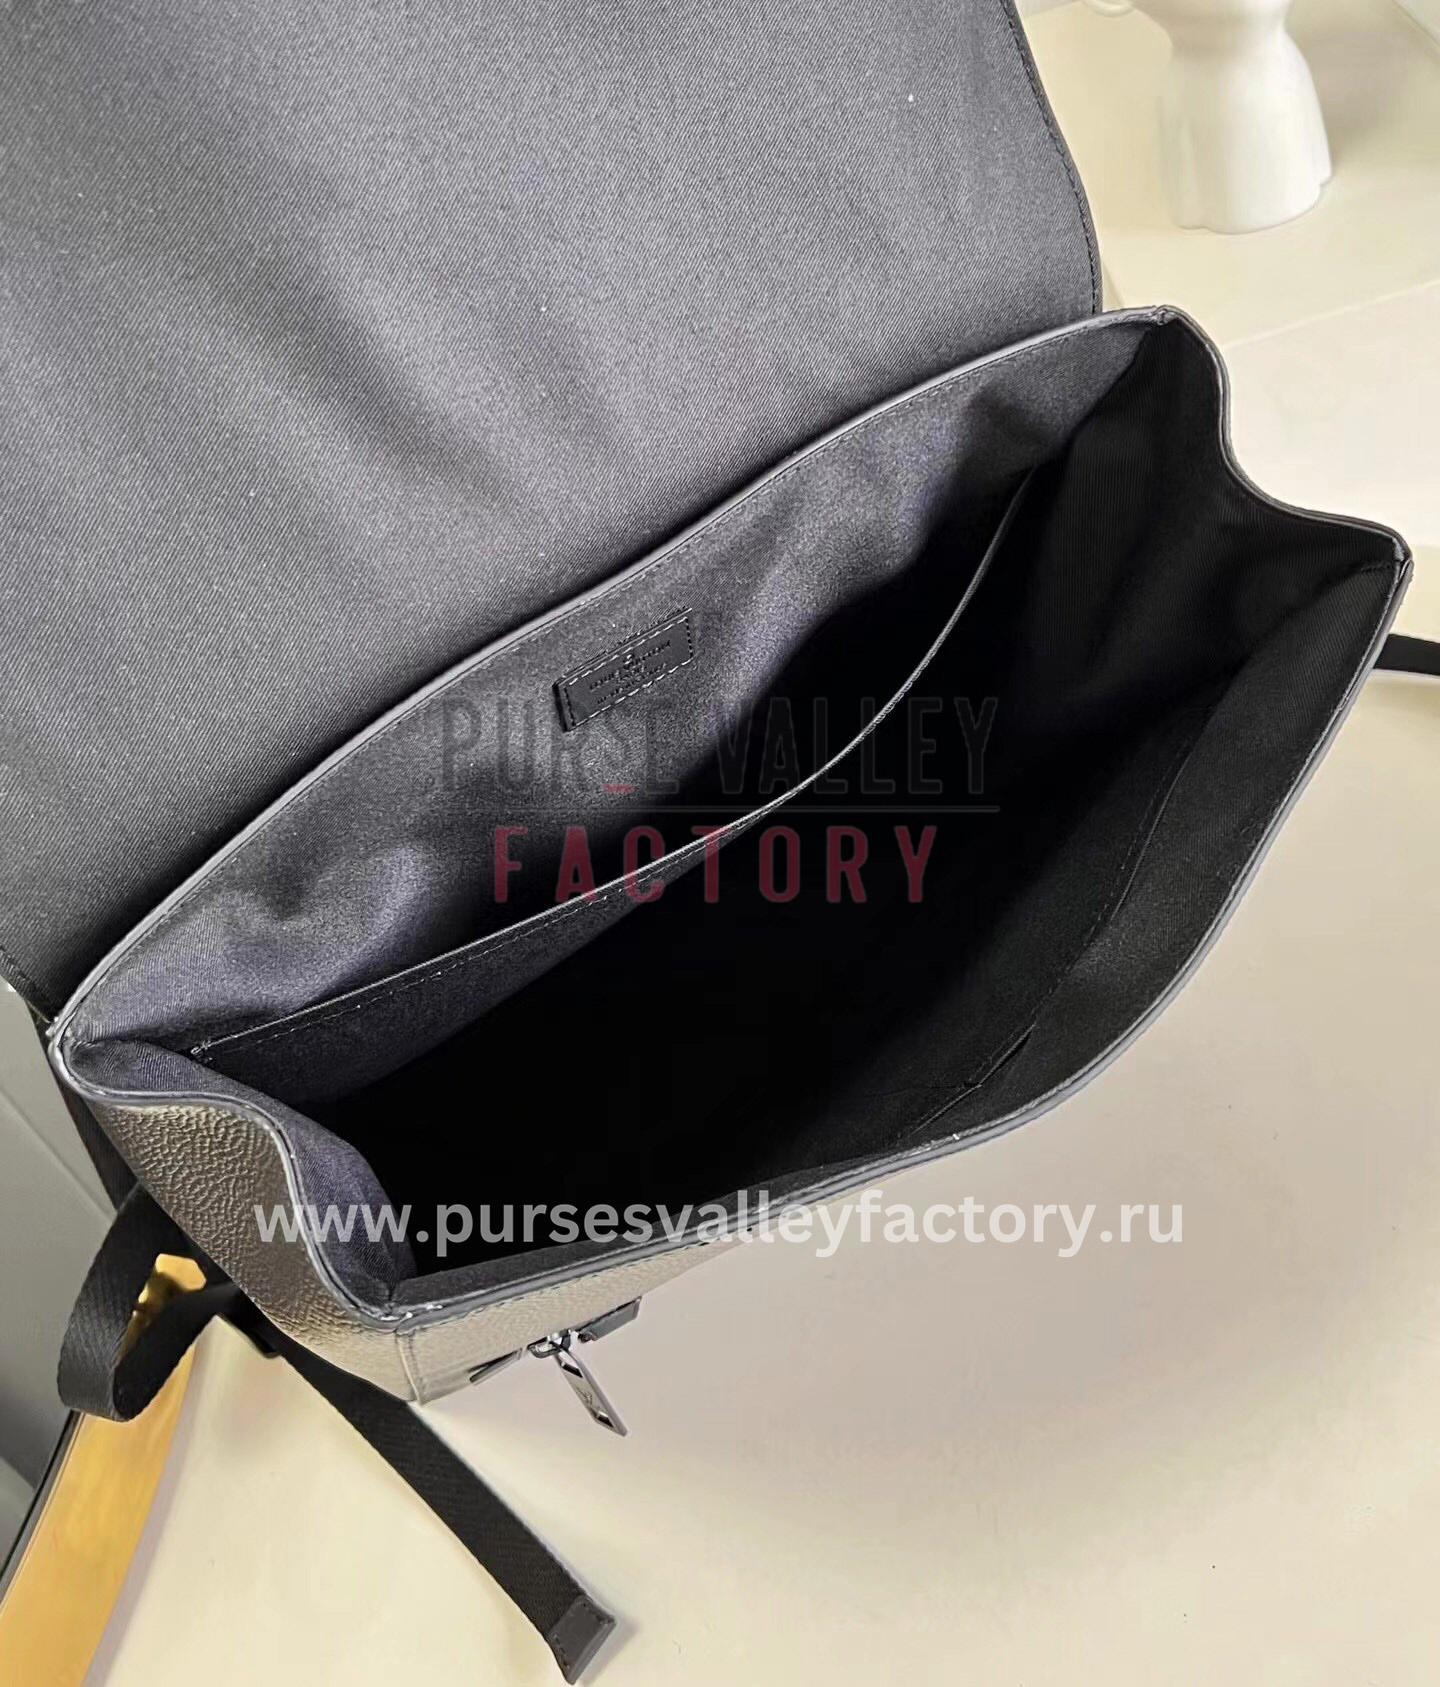 Louis Vuitton FASTLINE BACKPACK Black M21367 - PurseValley Factory